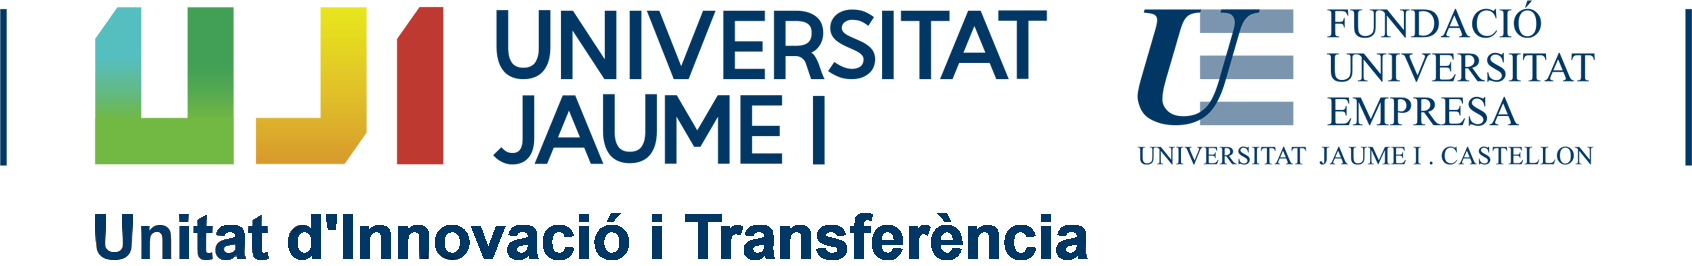 Logo UJI Innova